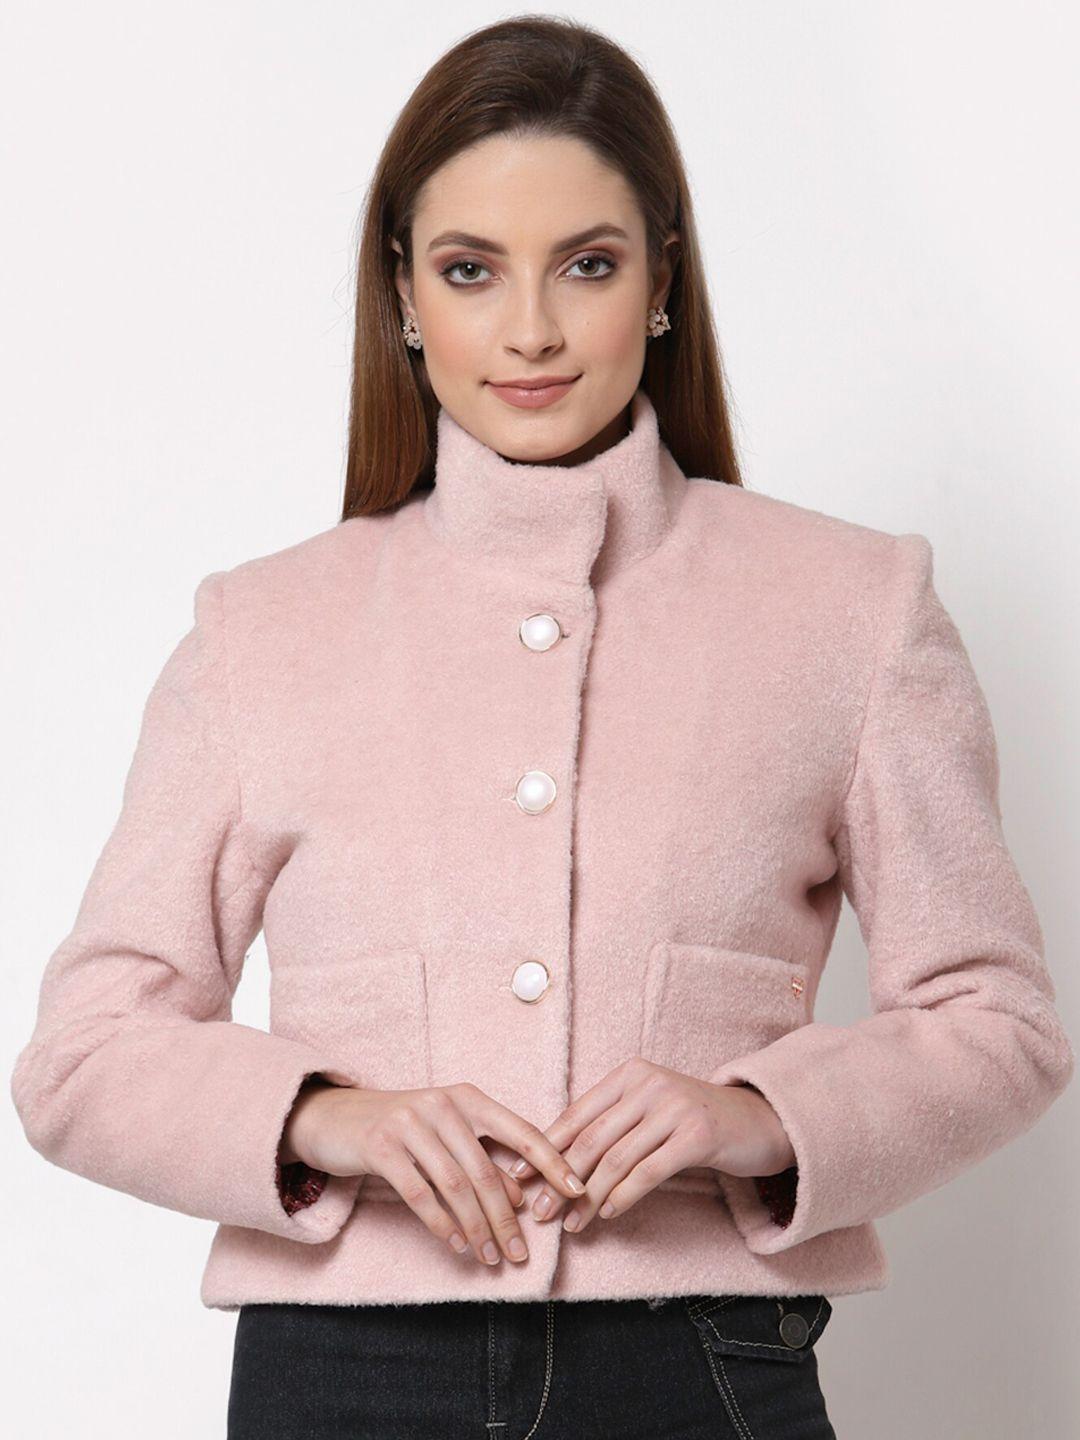 juelle women self-designed single-breasted pea coat